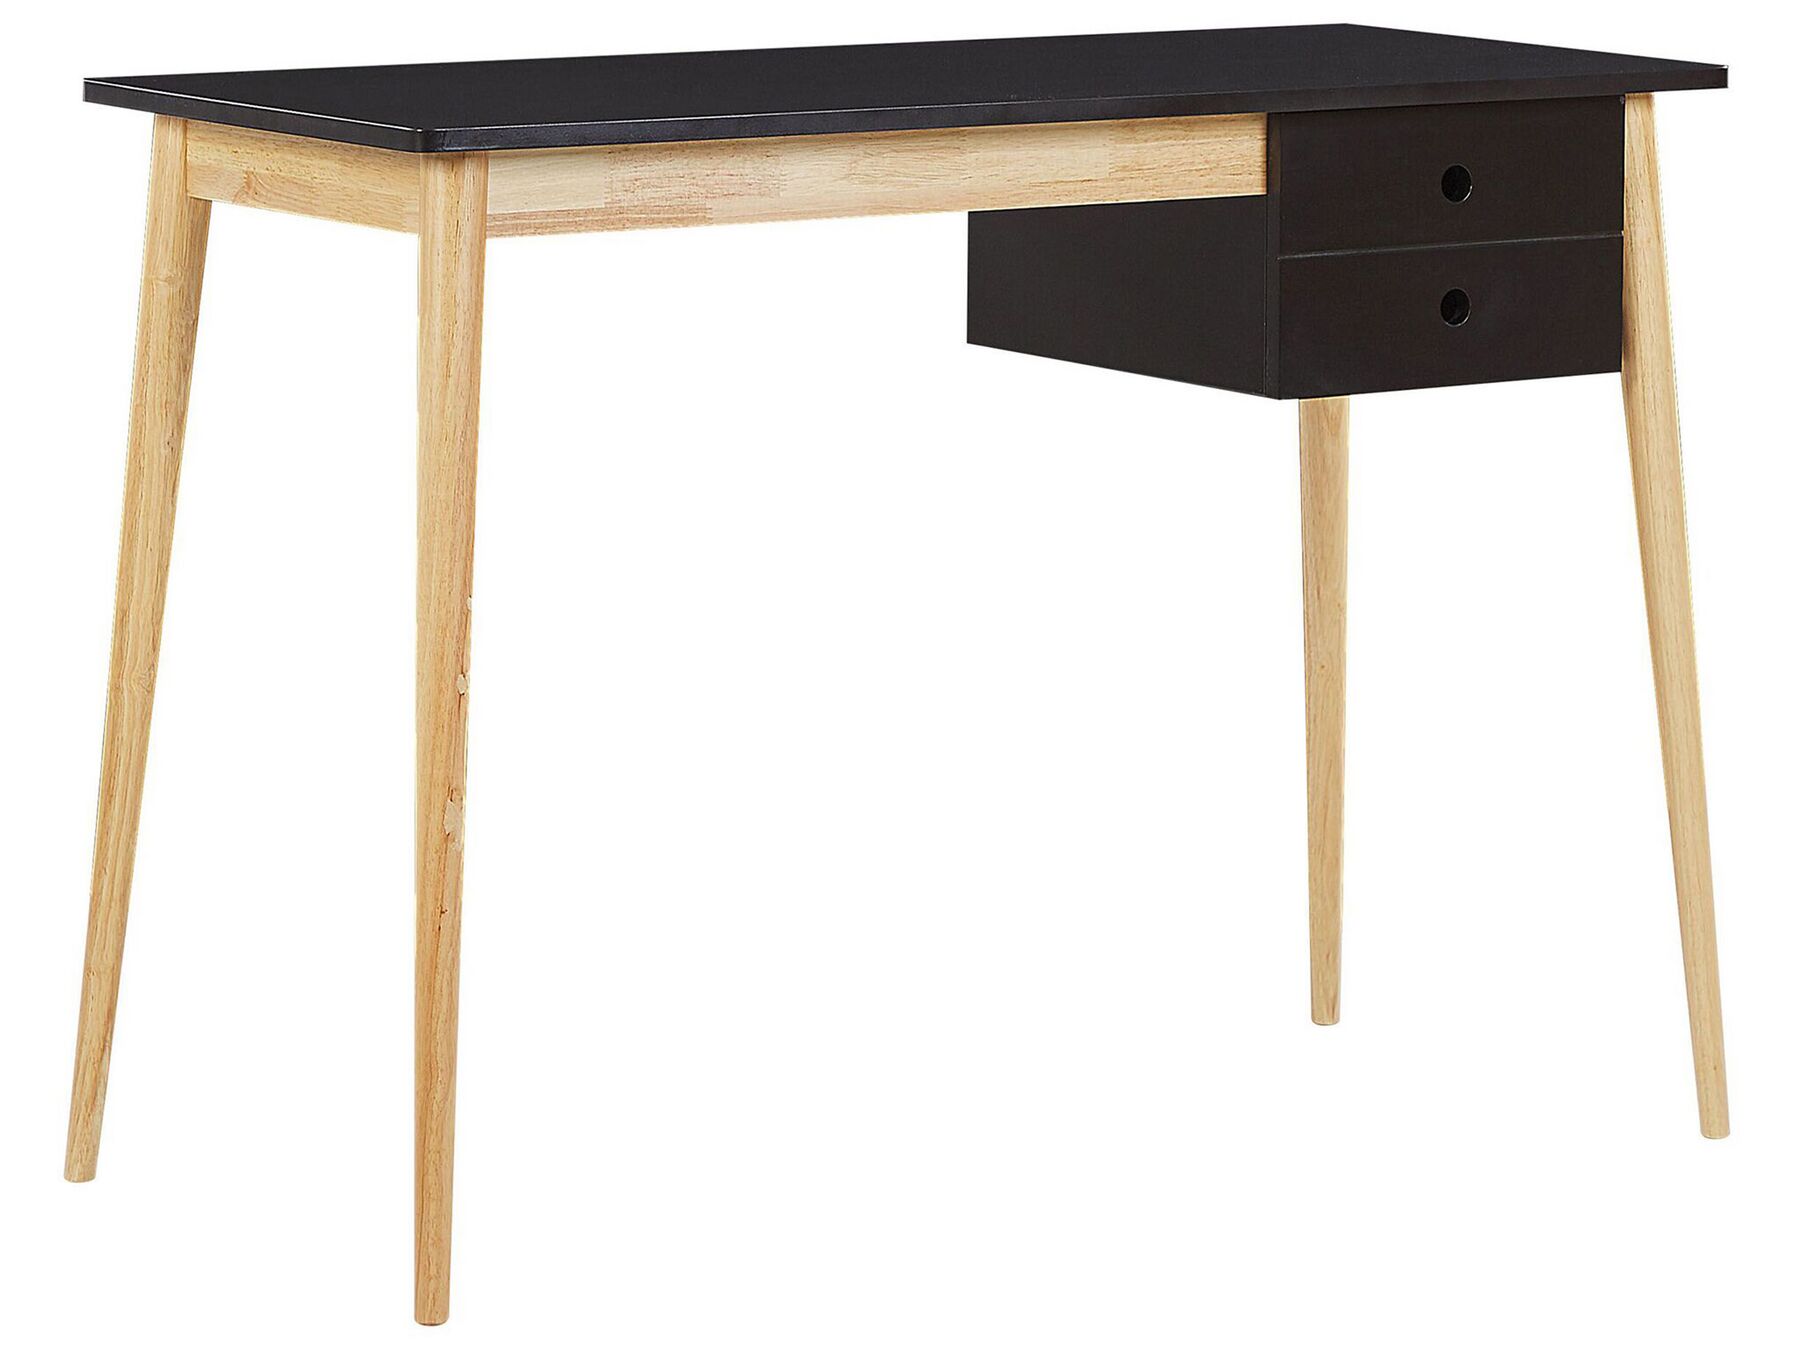 Minimalist Desk in Black / Light Wood Hue 106 x 48 cm Ebeme -